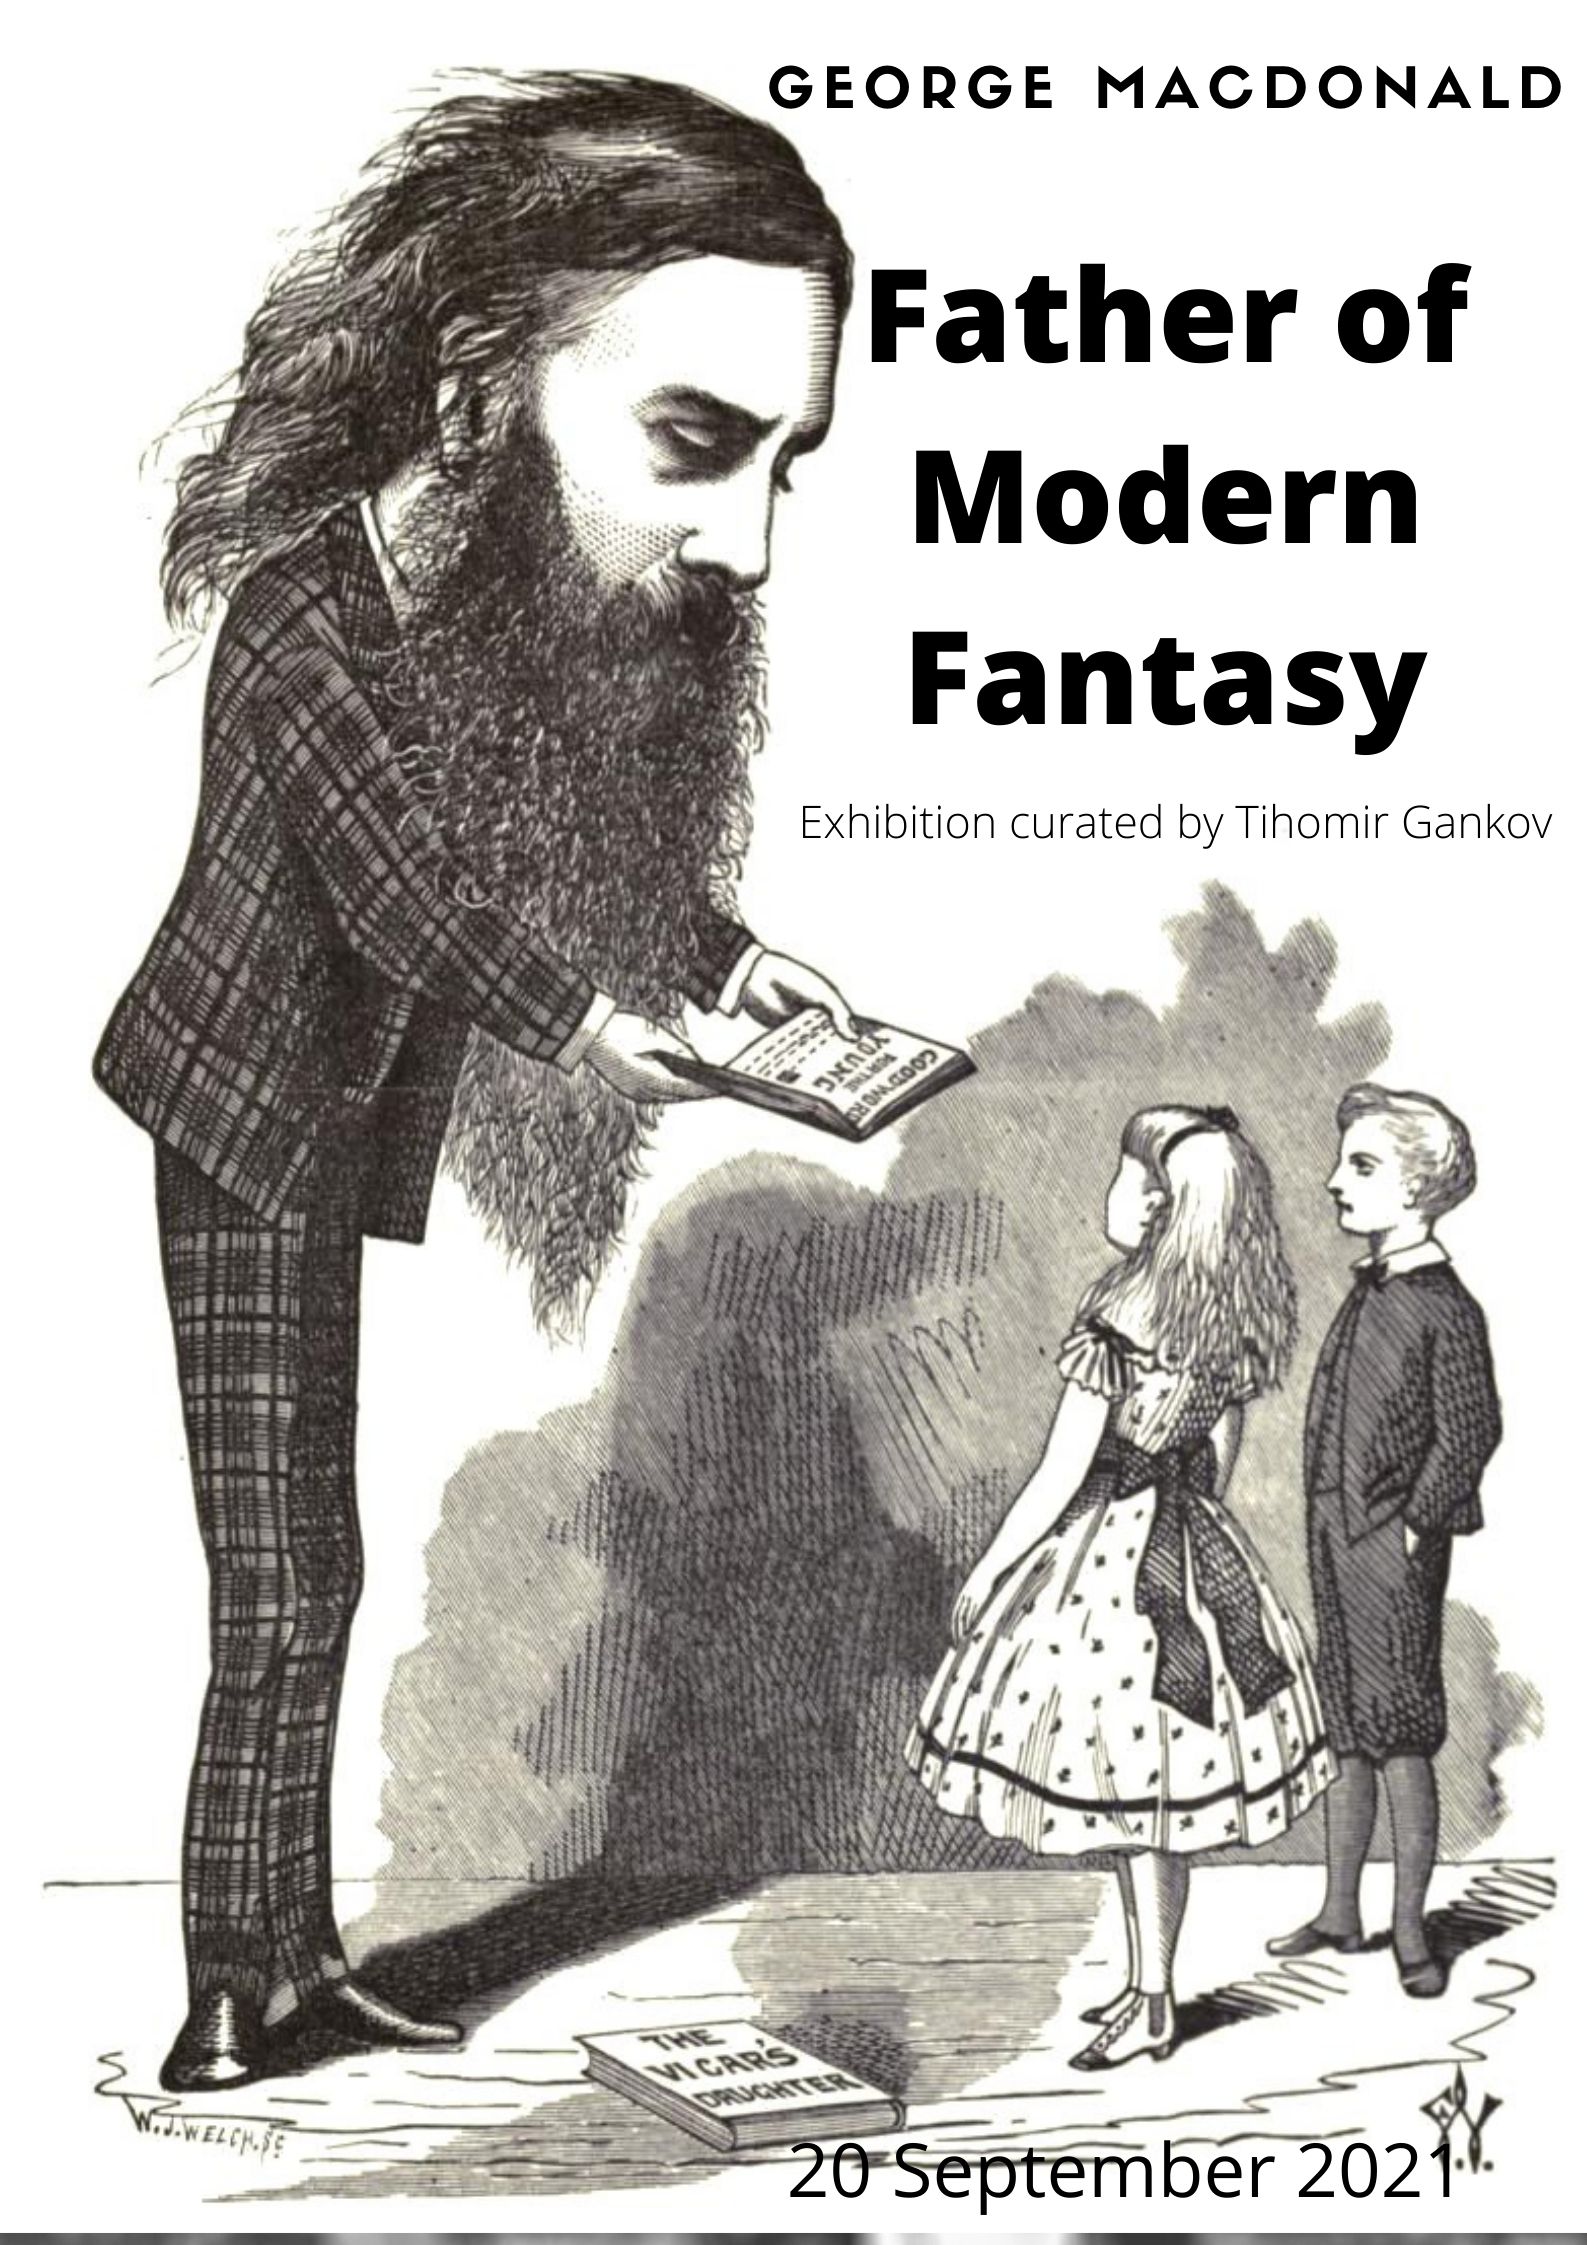 George Macdonald: Father of Modern Fantasy